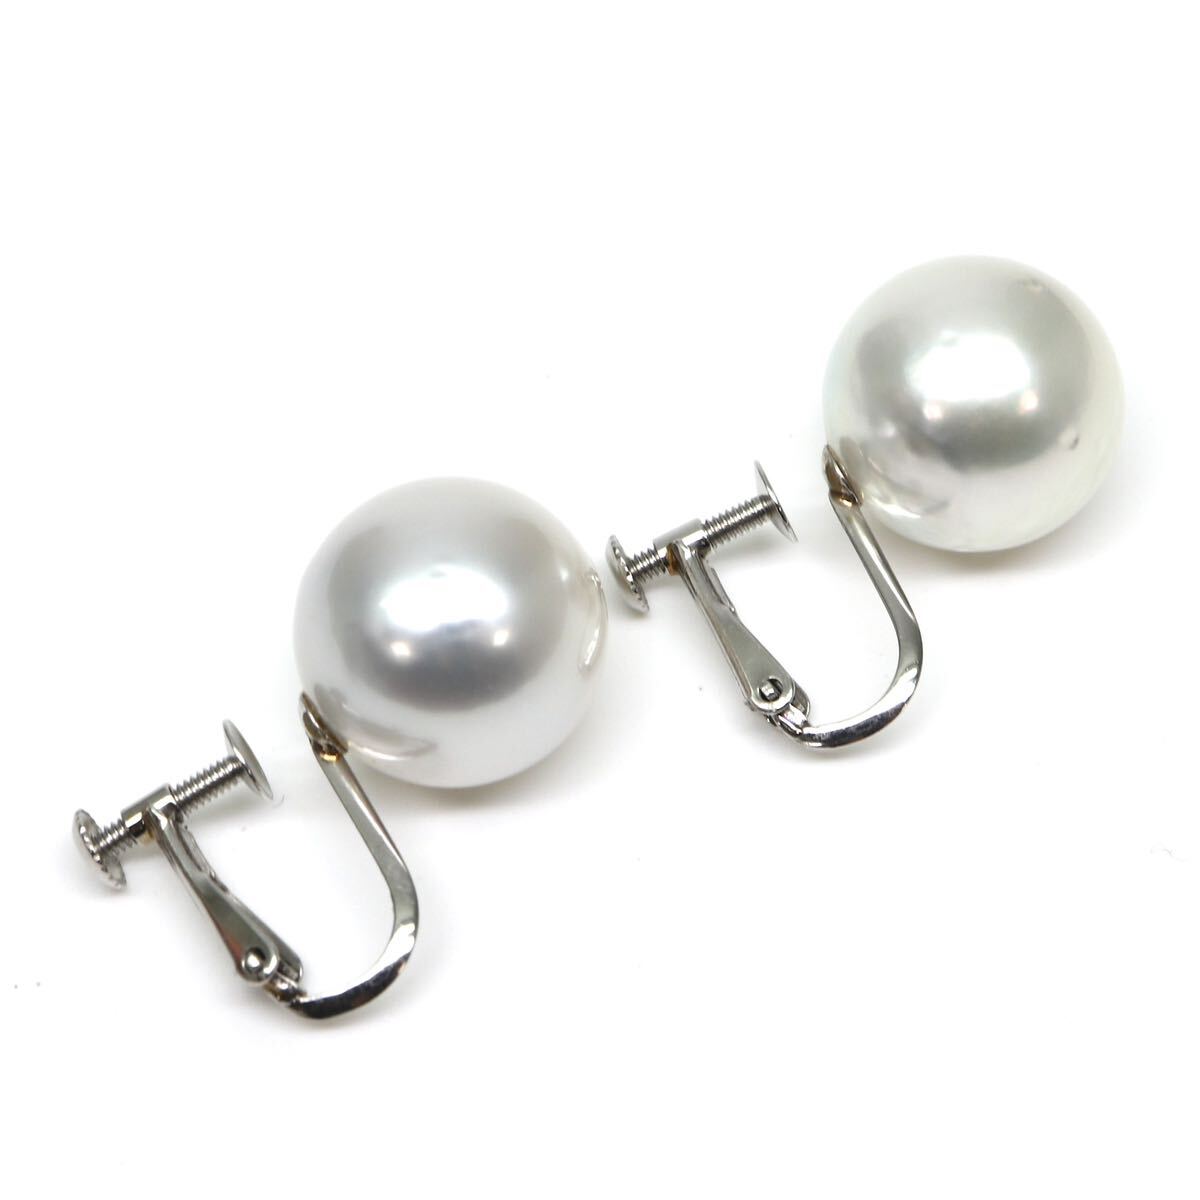 12mm珠!!◆Pt900 南洋白蝶真珠イヤリング◆M 約7.0g 12.0mm珠 パール pearl ジュエリー jewelry earring DI8/EB2の画像4